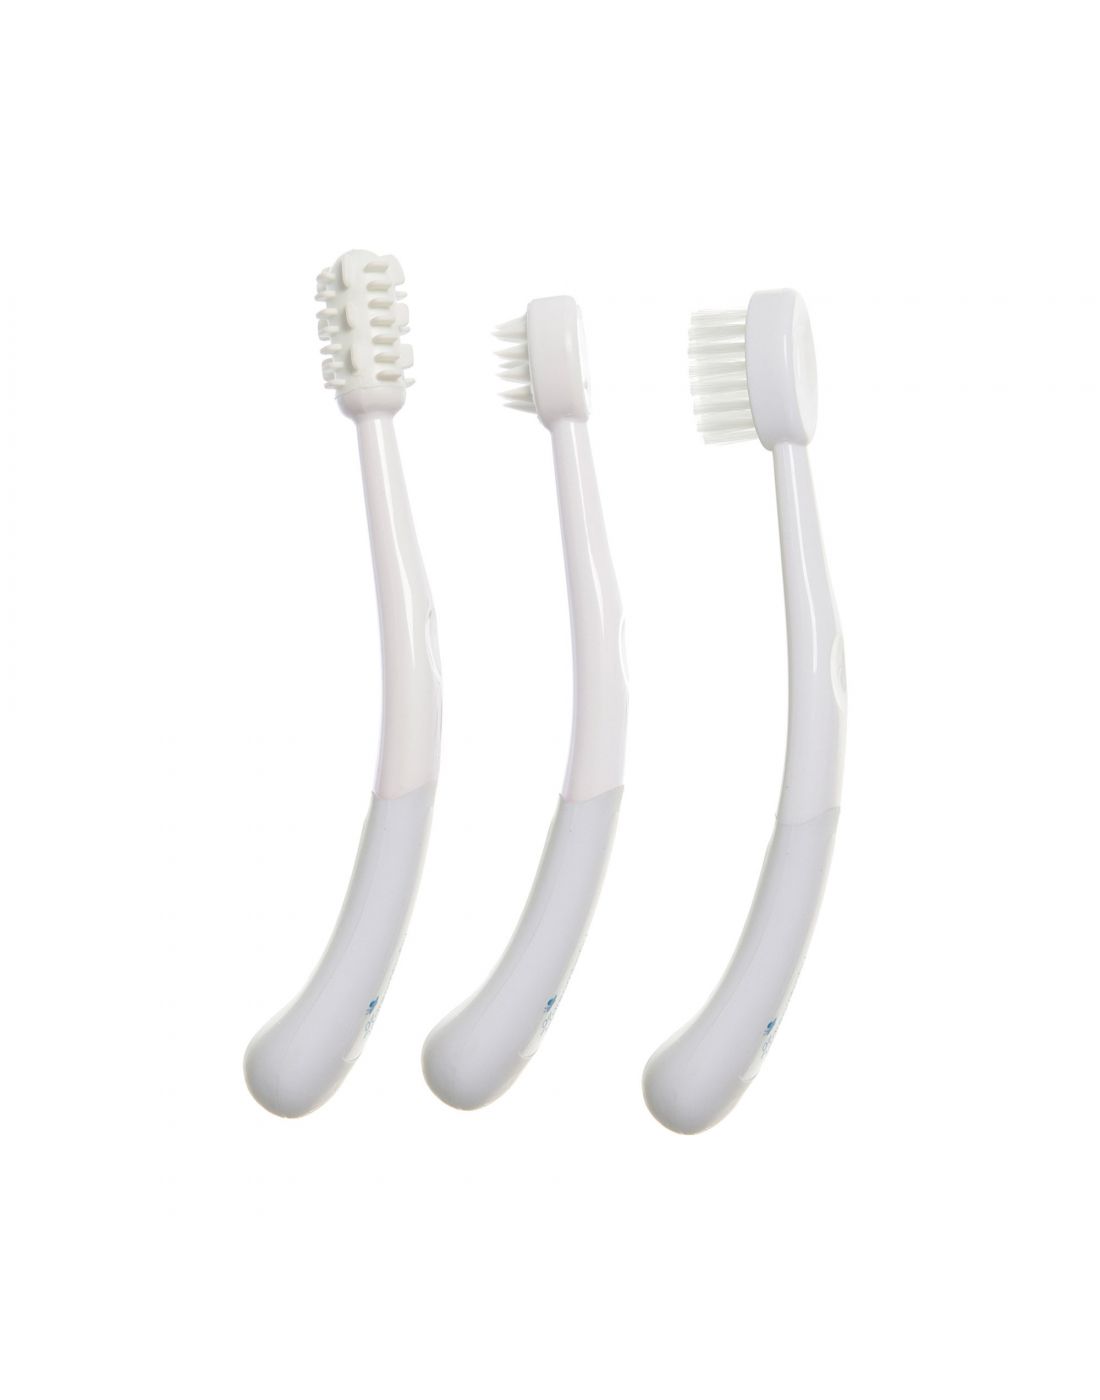 DreamBaby Kids Toothbrush Set 3 Stage White